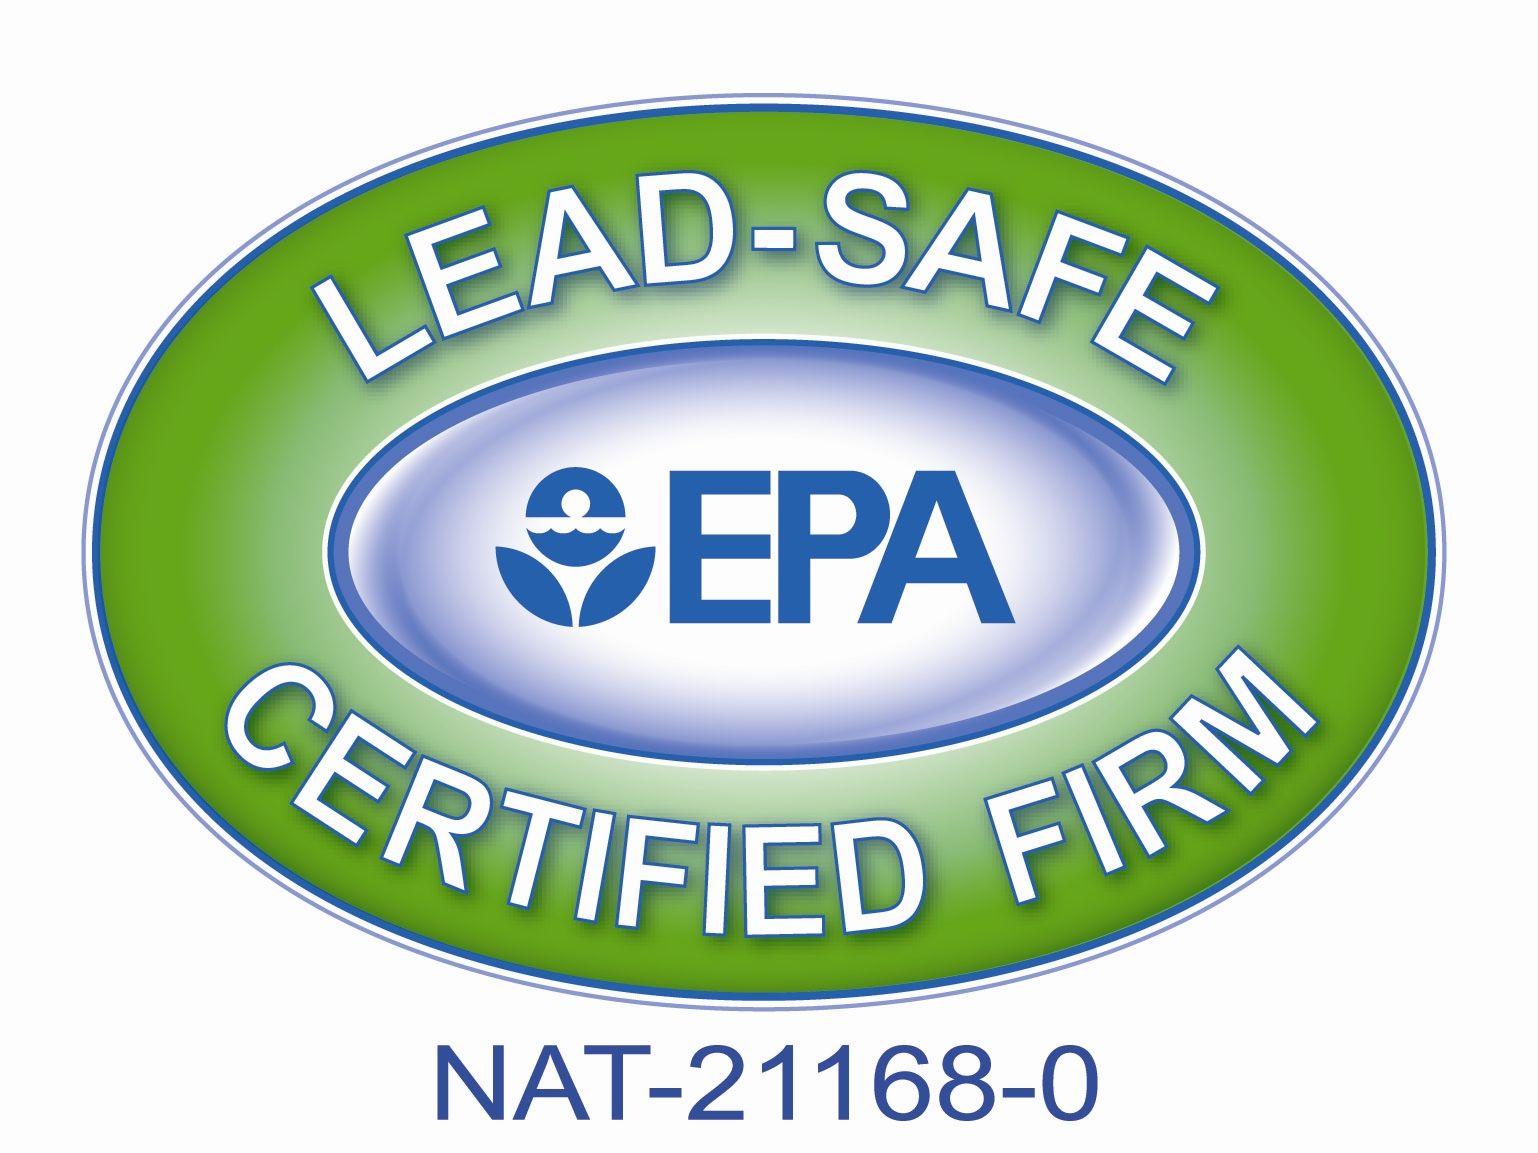 EPA Lead Safe Logo - MA Restoration Inc. Lead Safe EPA Logo